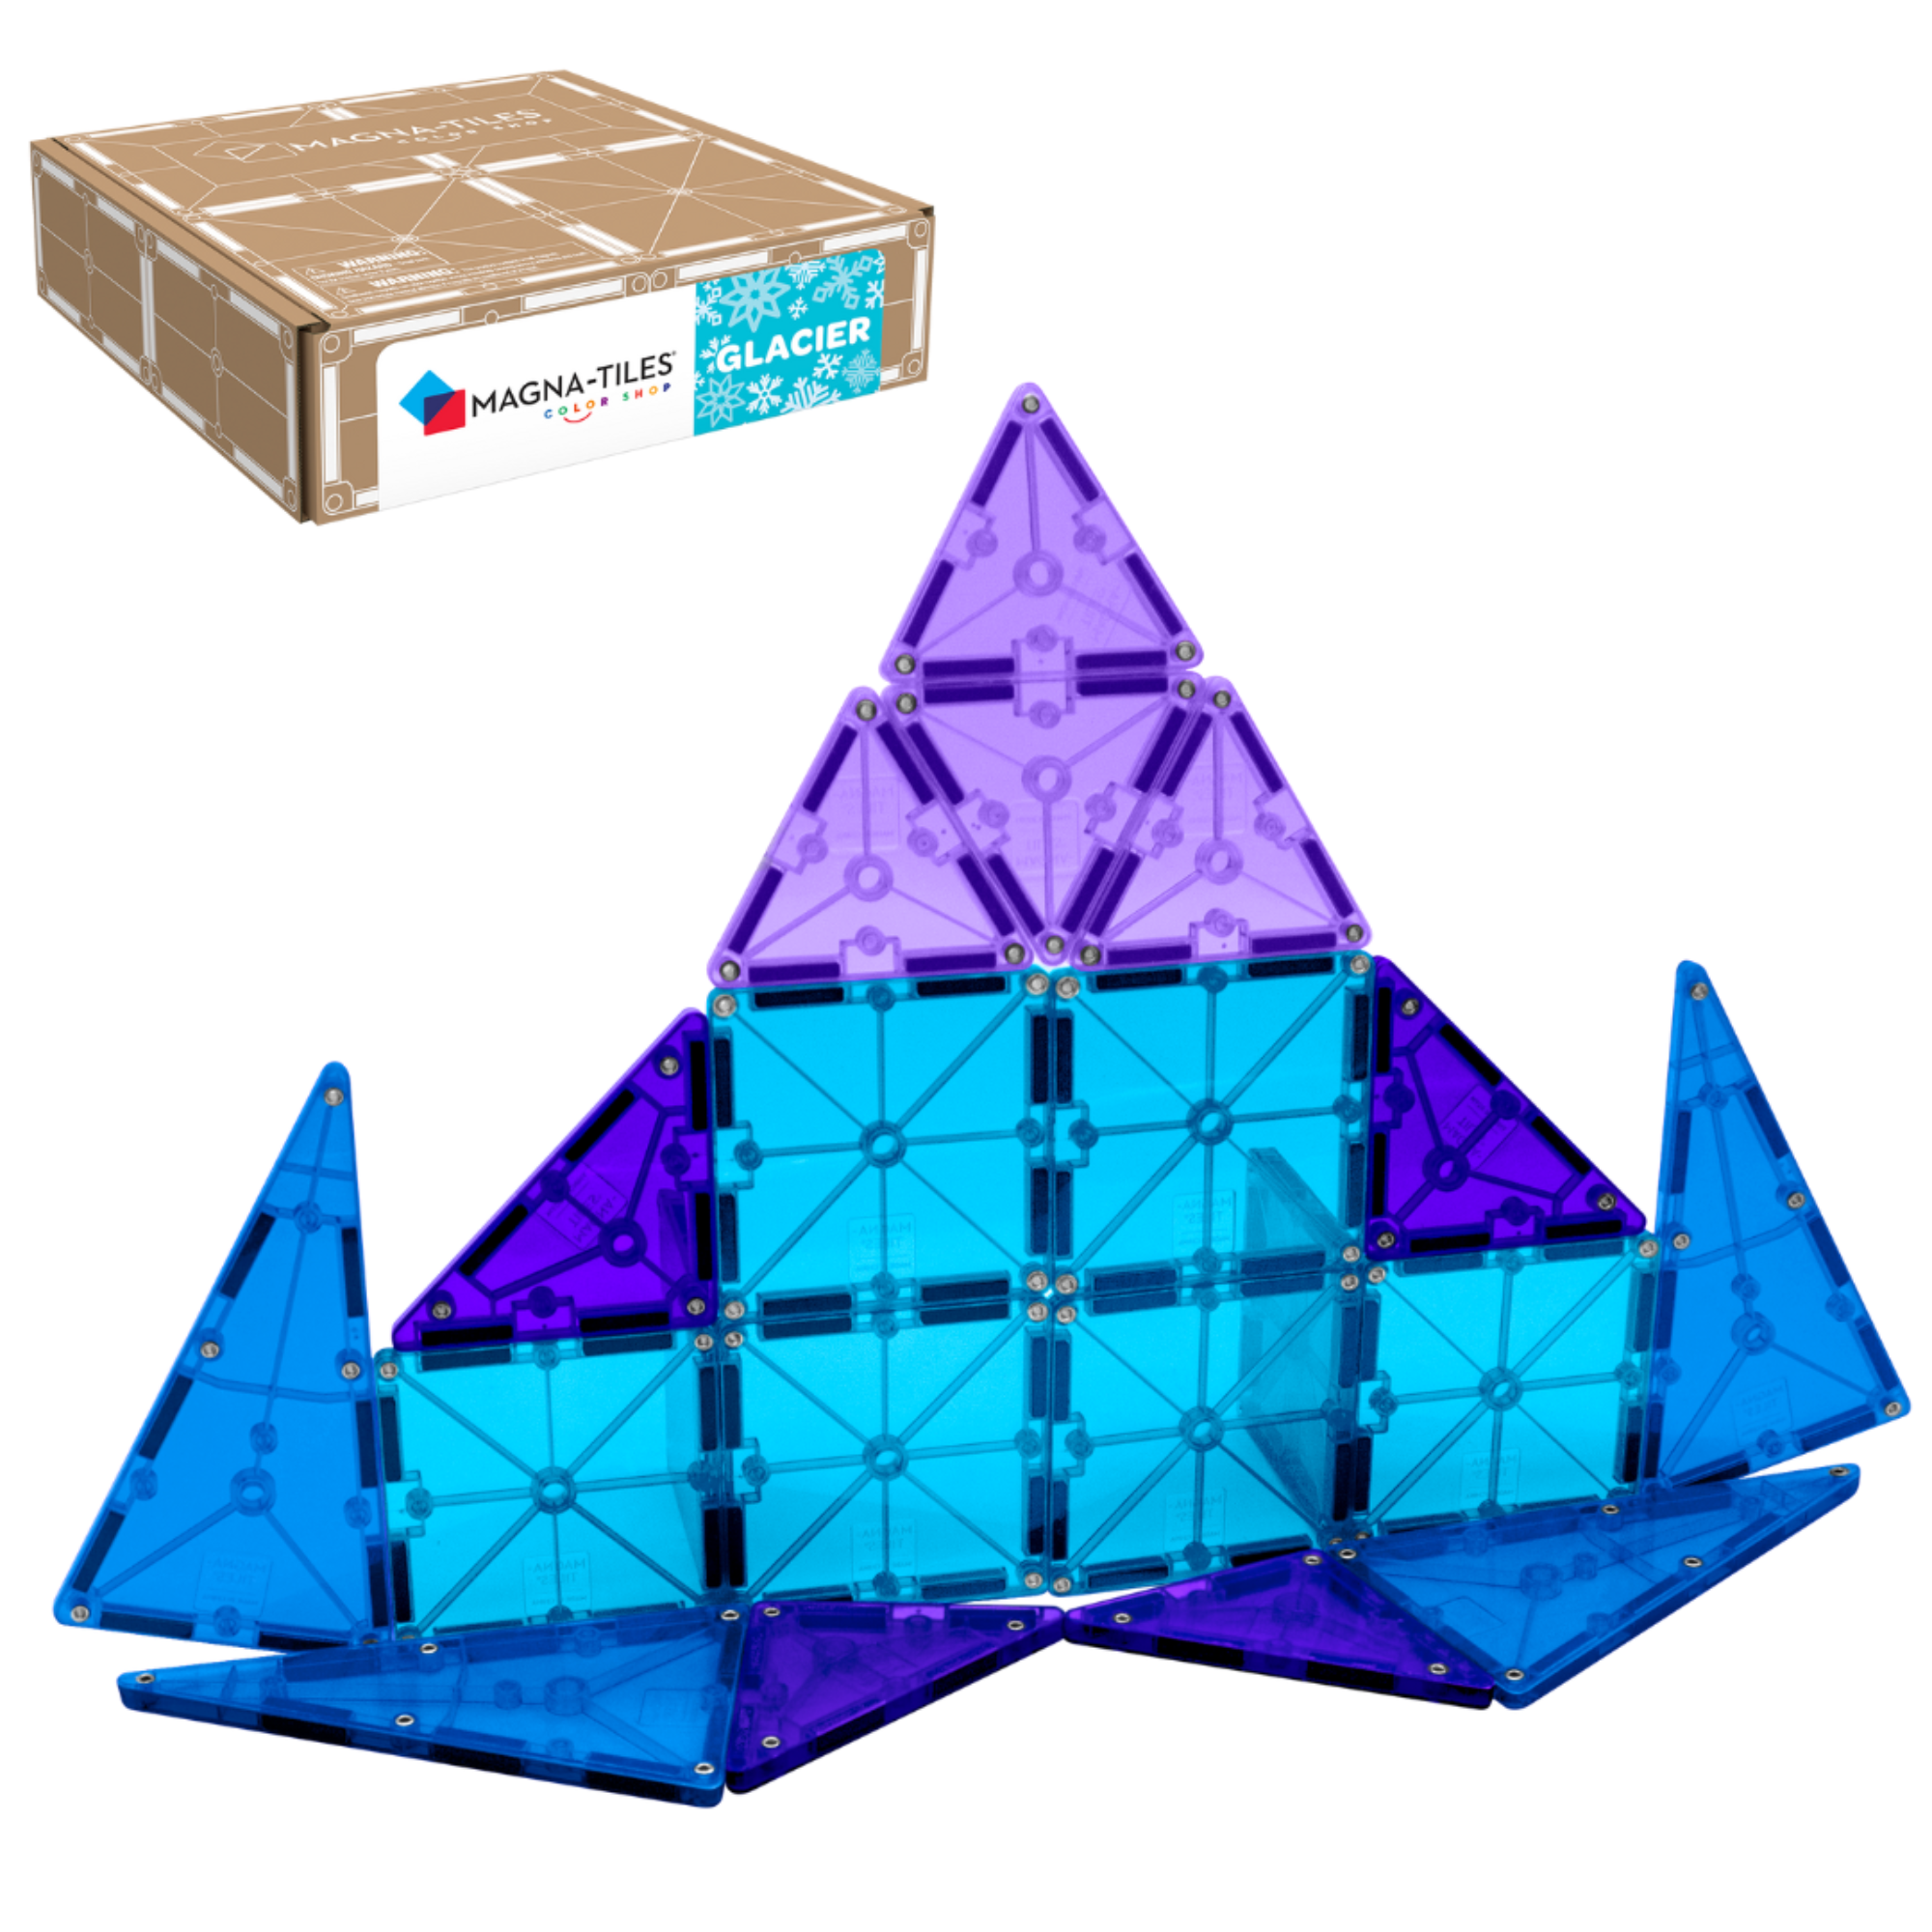 Color Shop Glacier Packaging and build